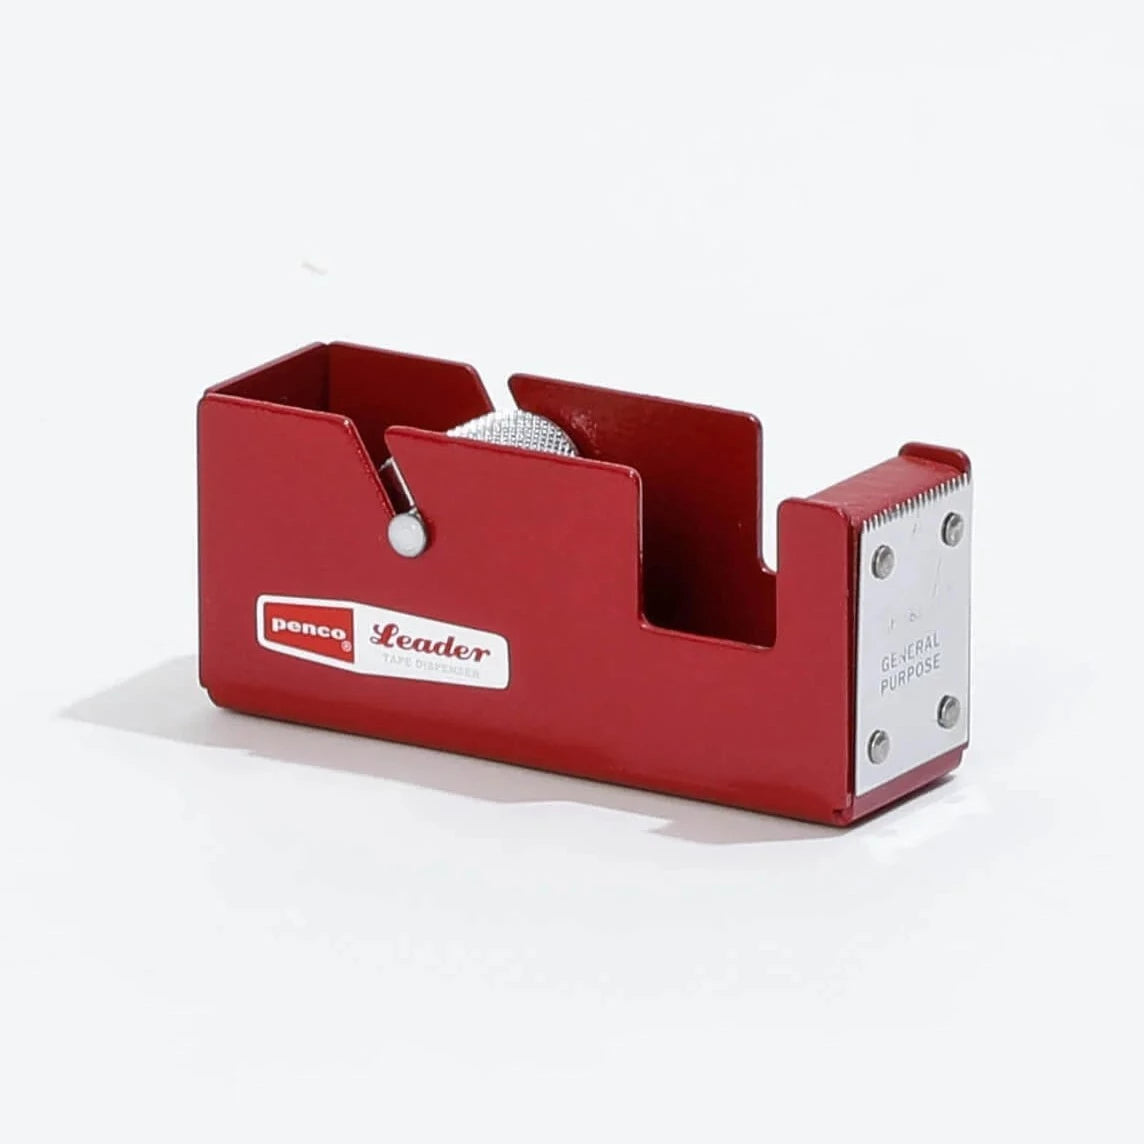 Penco Tape Dispenser - Red